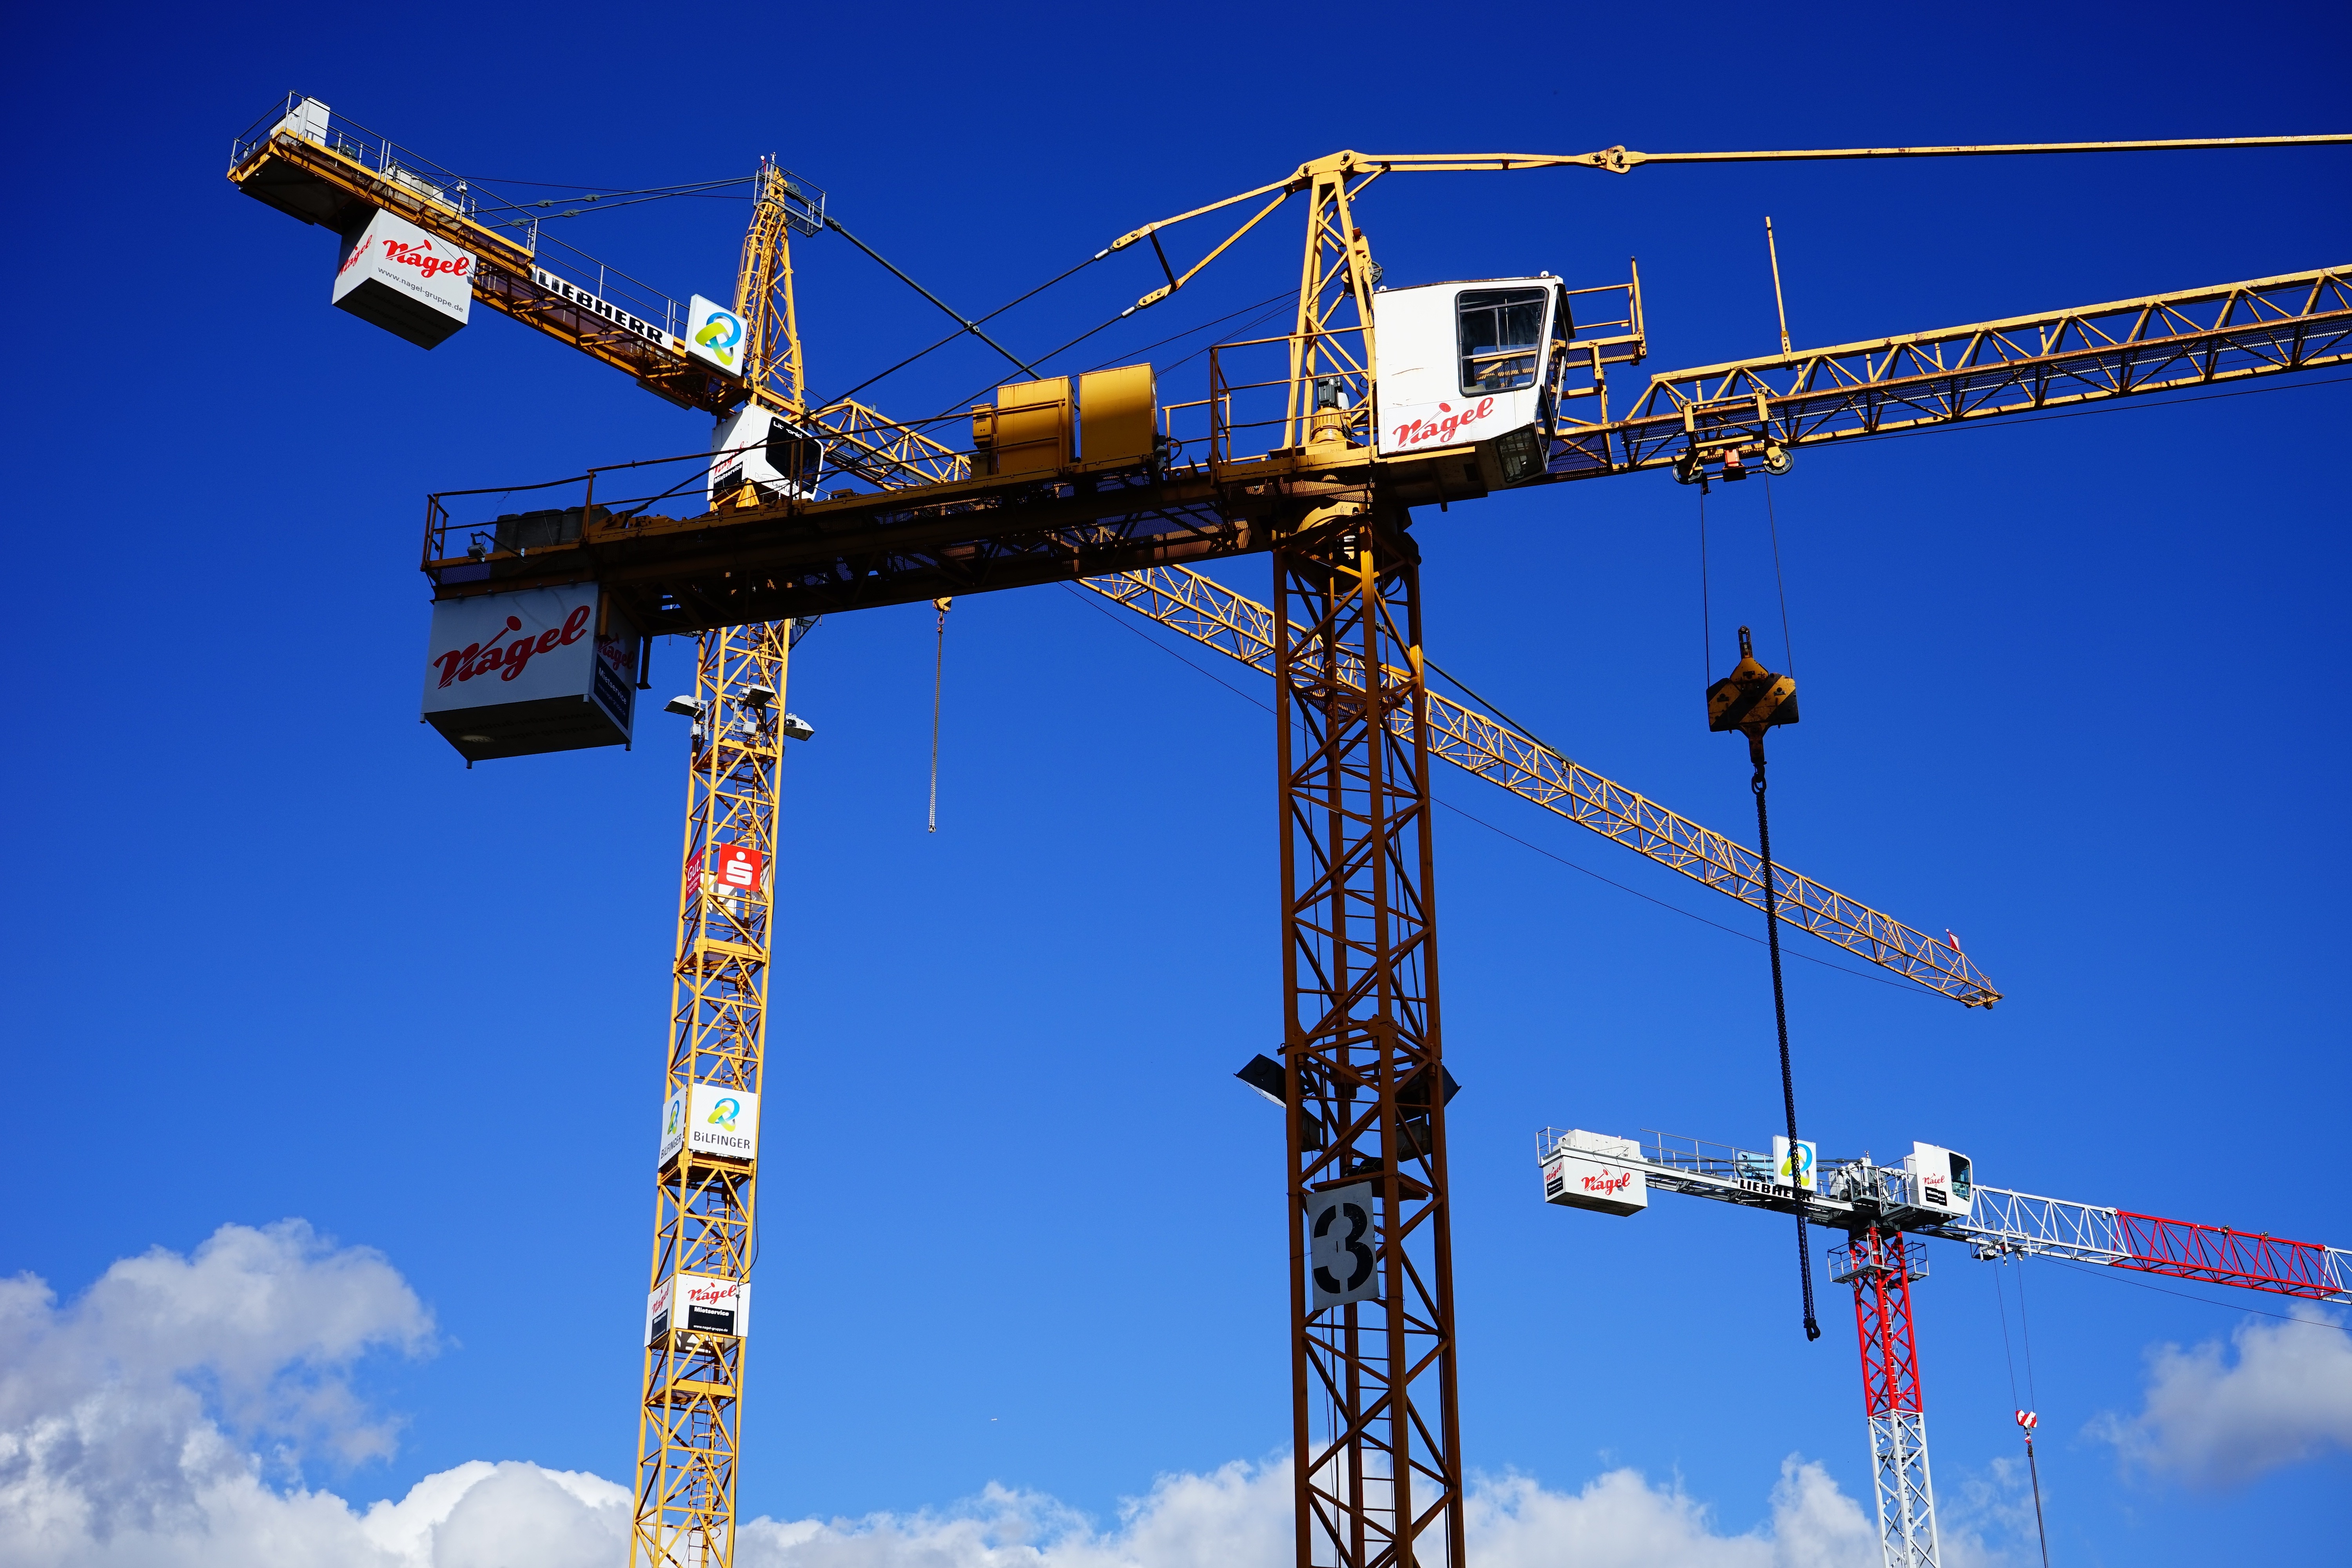 Load Lifter, Site, Cranes, Baukran, crane - construction machinery, industry